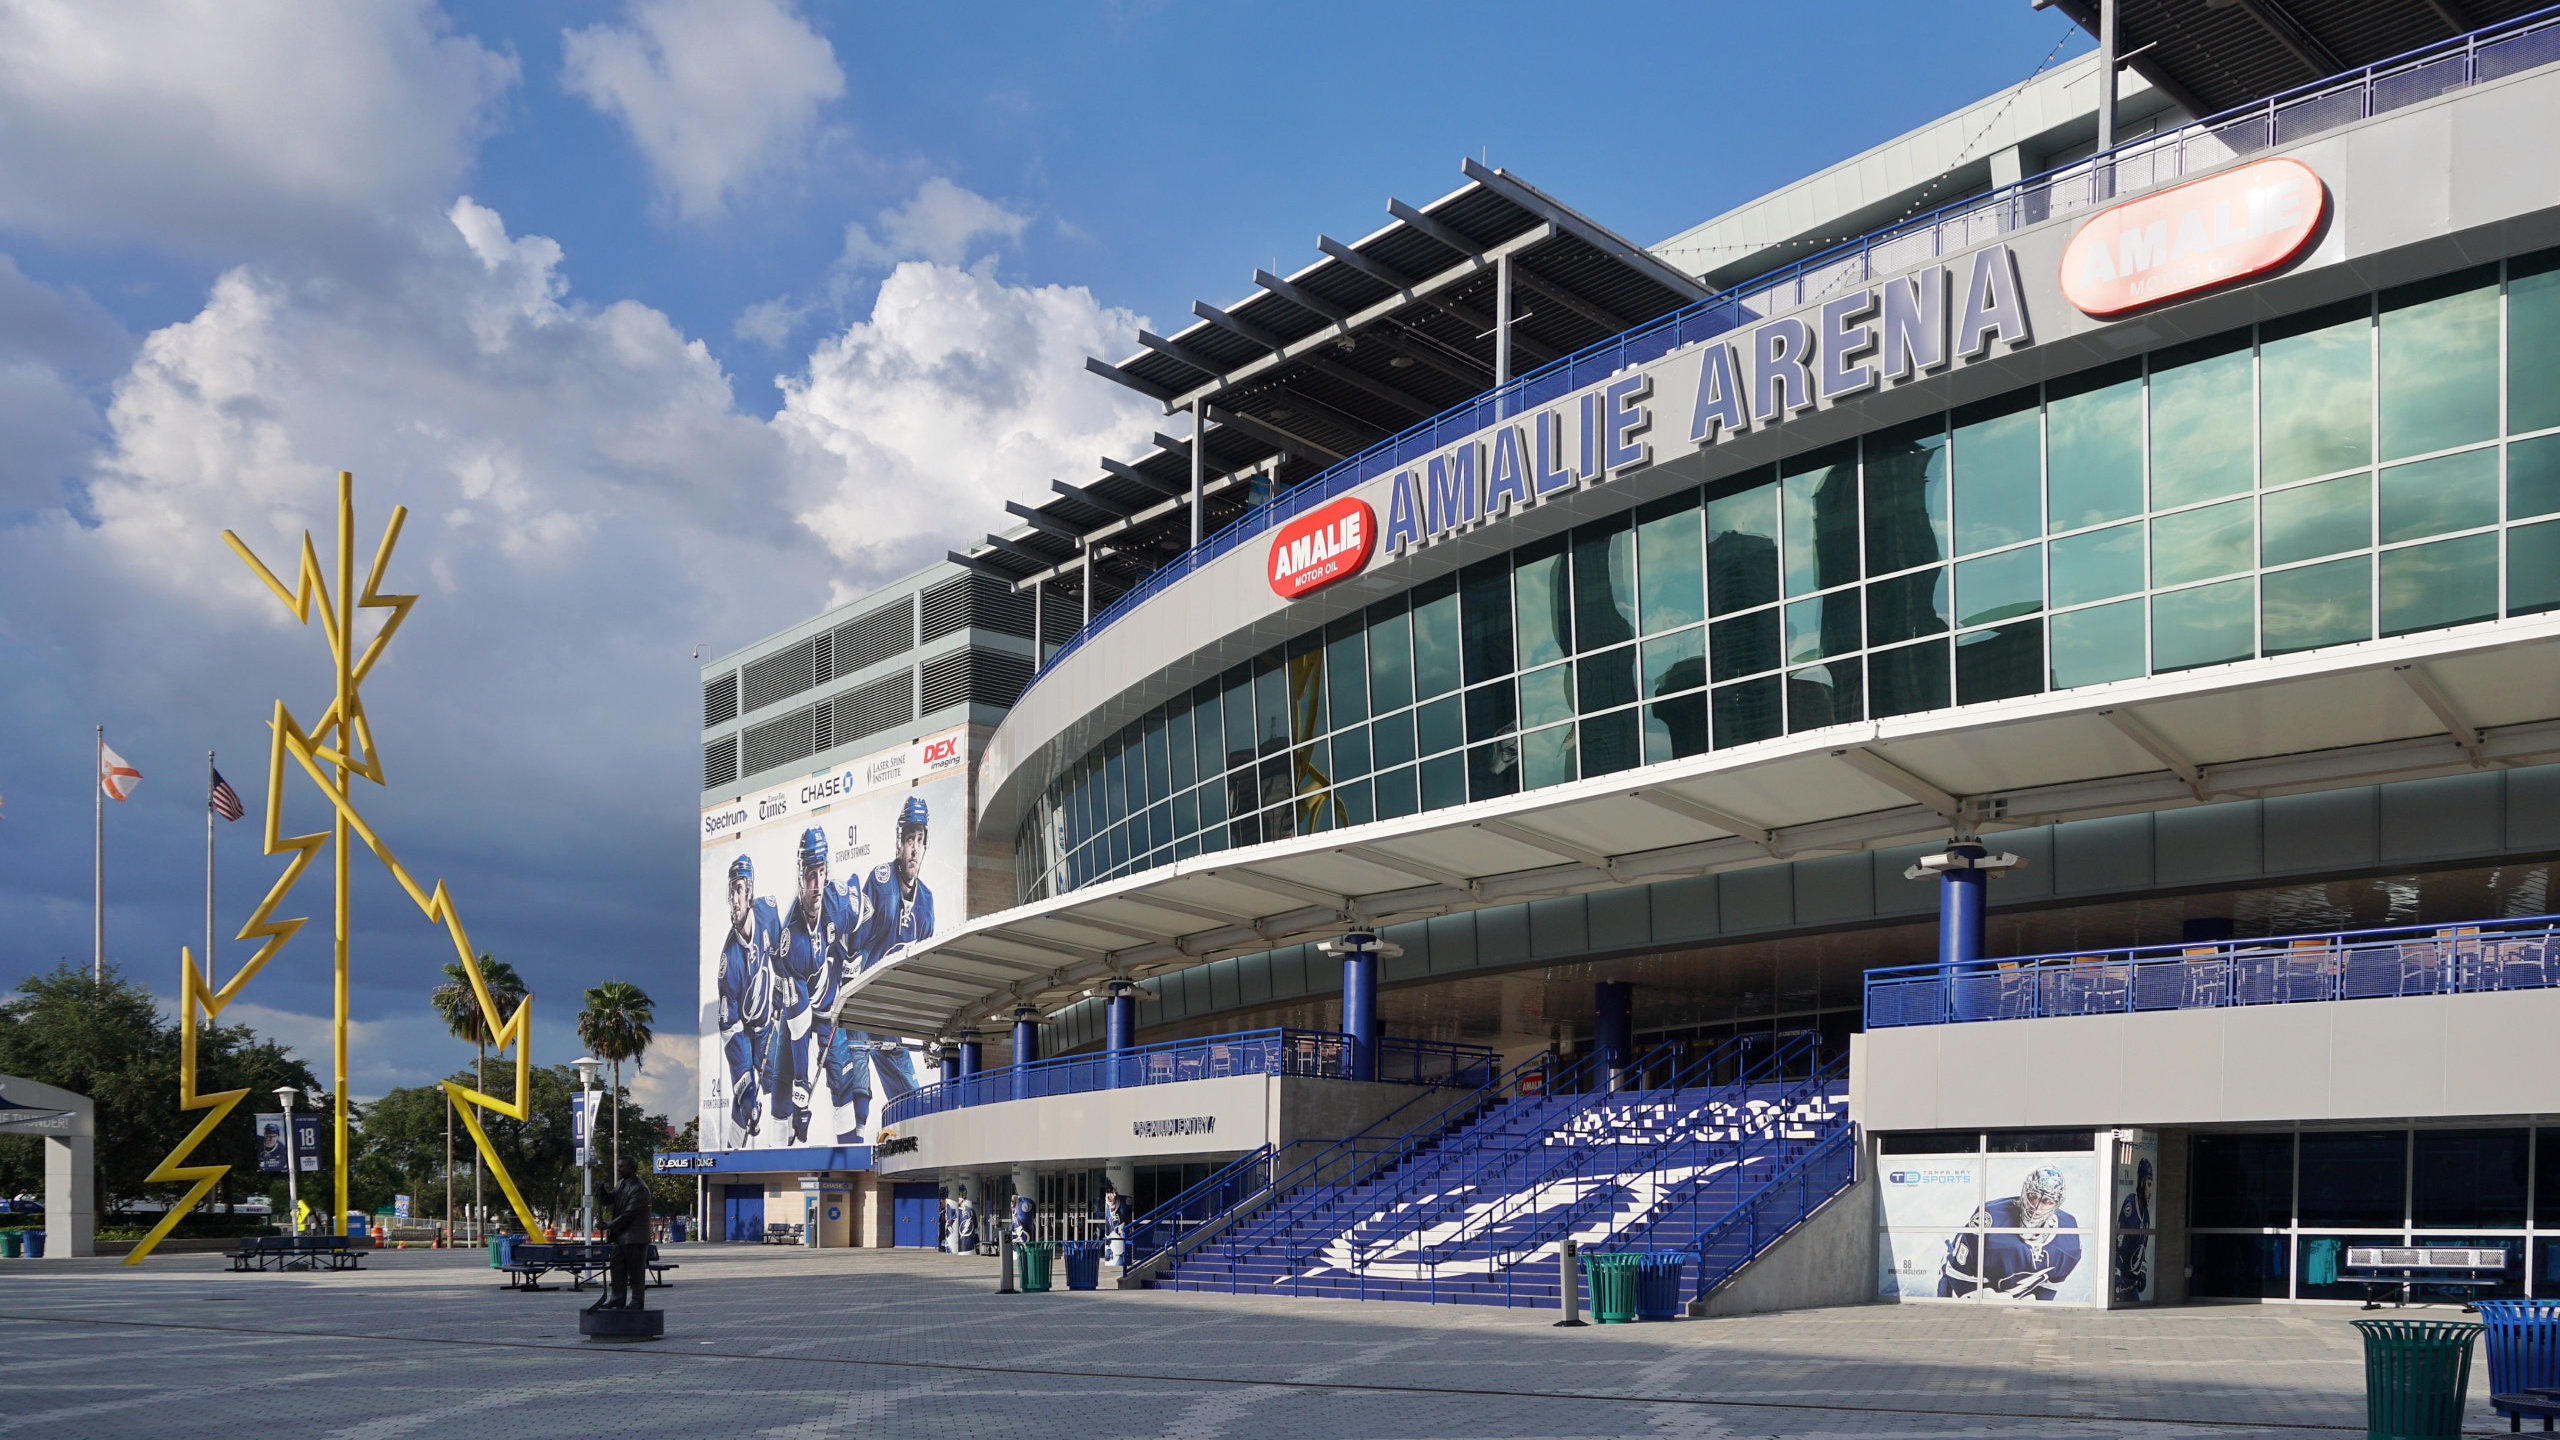 Amalie Arena - Tampa Sports Venue